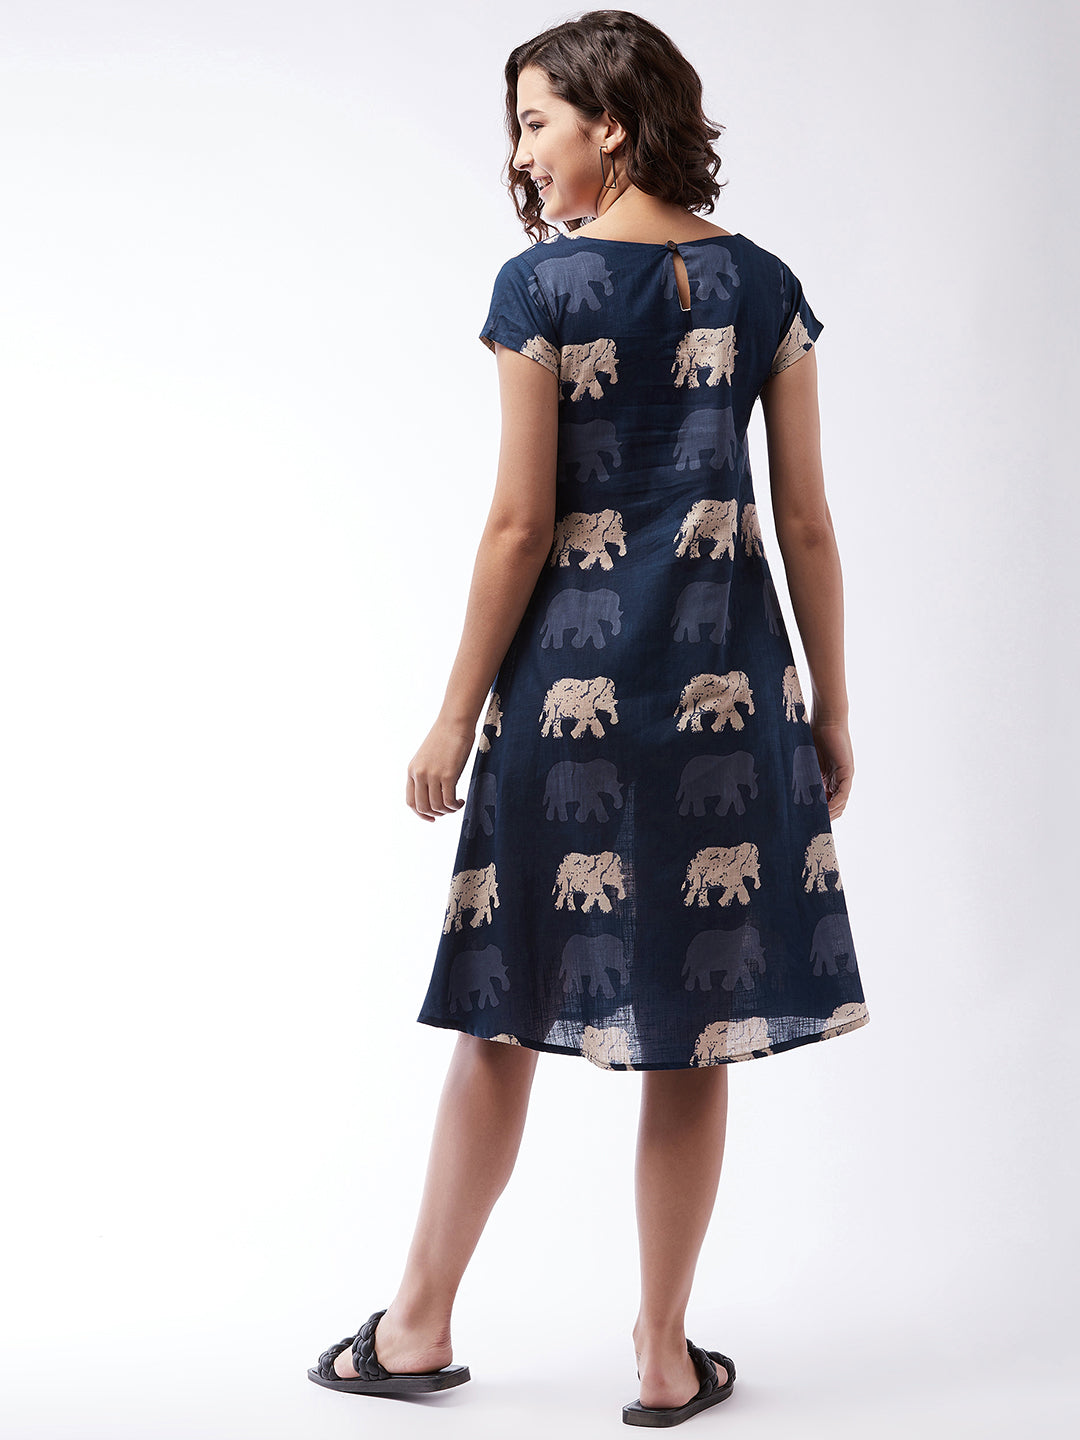 Blue Elephant Dress For Teens